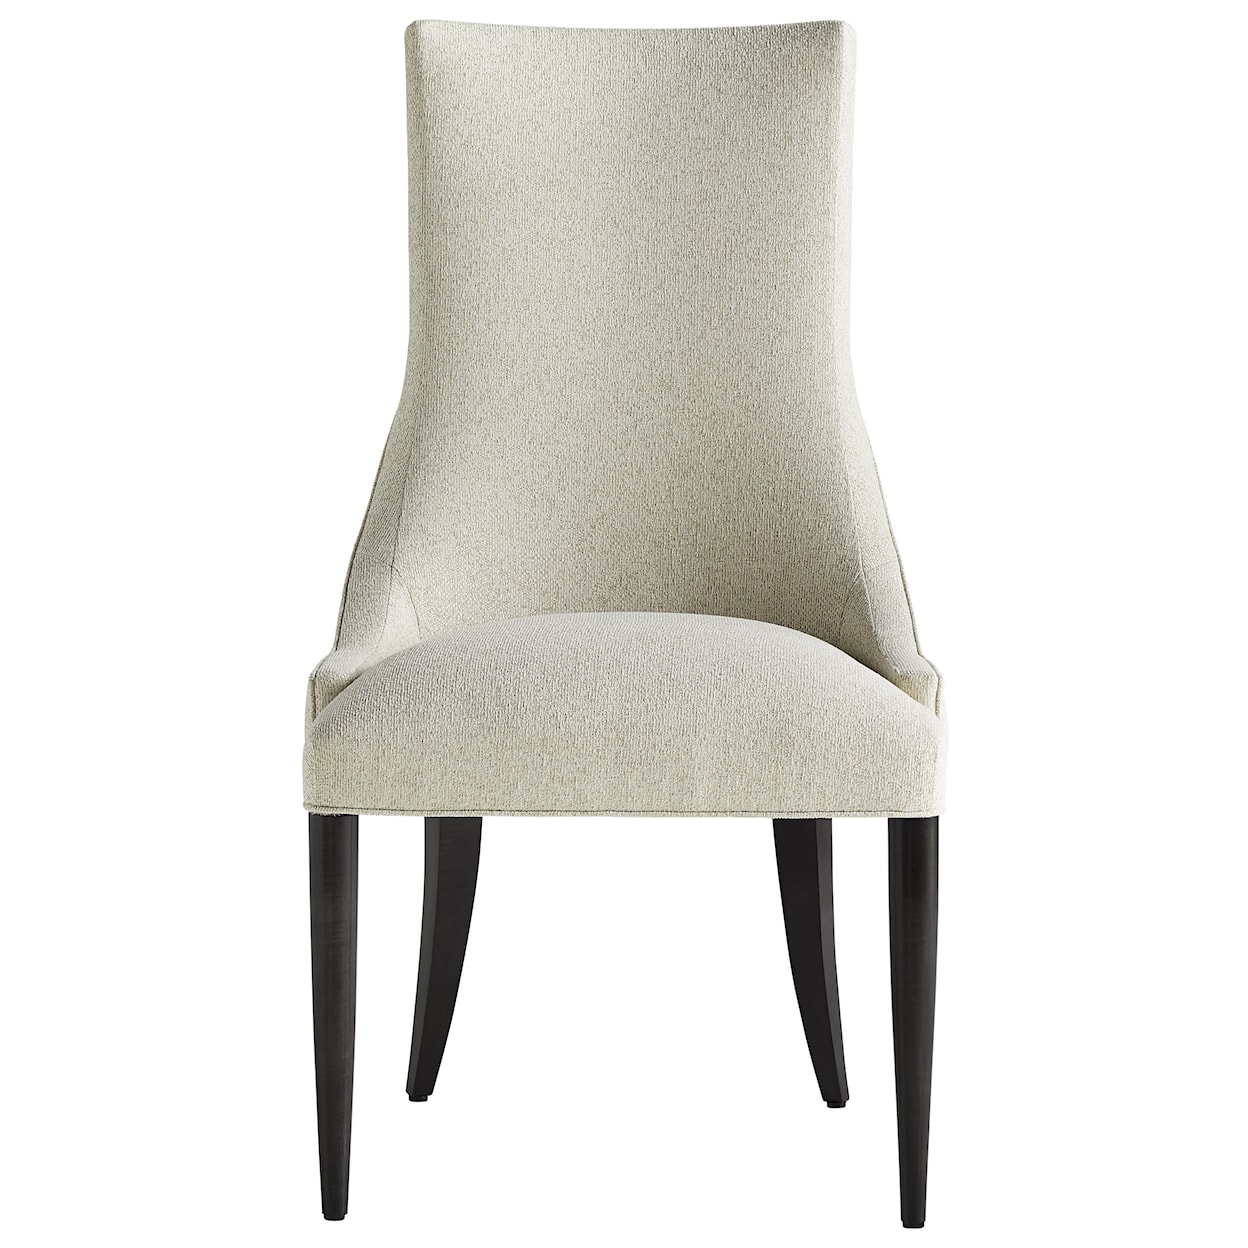 Vanguard Furniture Lillet Side Chair